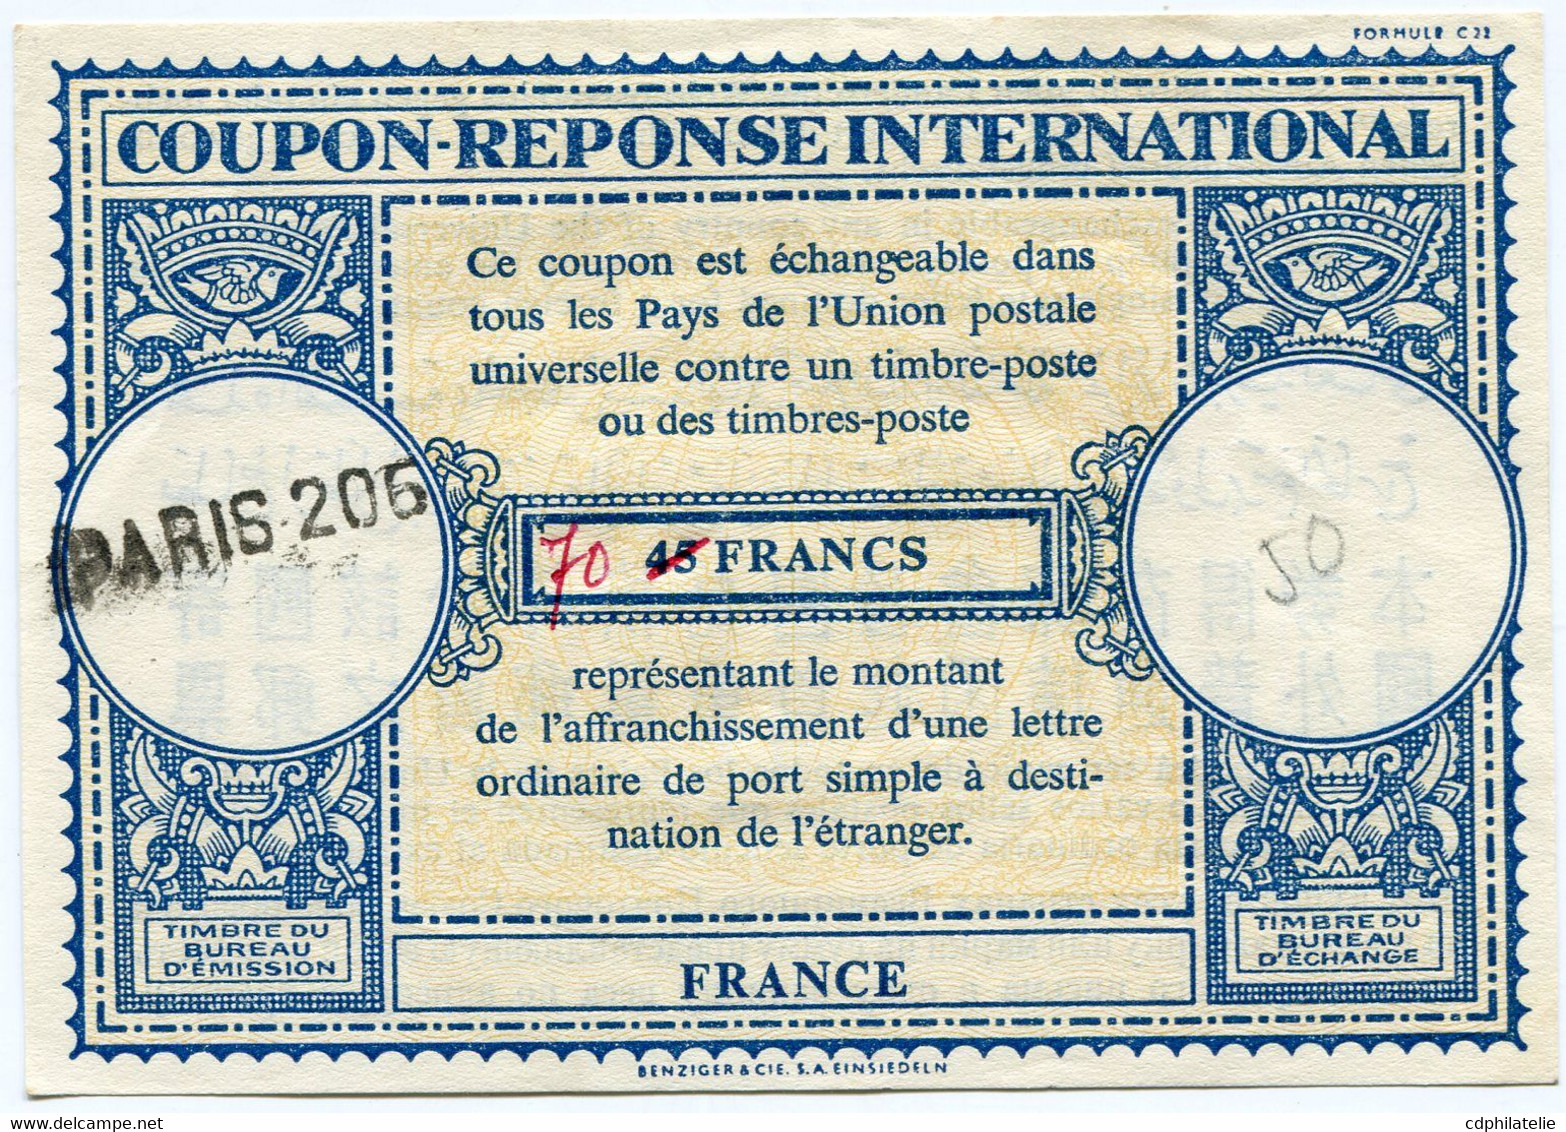 FRANCE COUPON-REPONSE INTERNATIONAL DE 45 FRANCS AVEC MODIFICATION MANUSCRITE DE TARIF 70 FRANCS AVEC OBL PARIS 206 - Antwoordbons